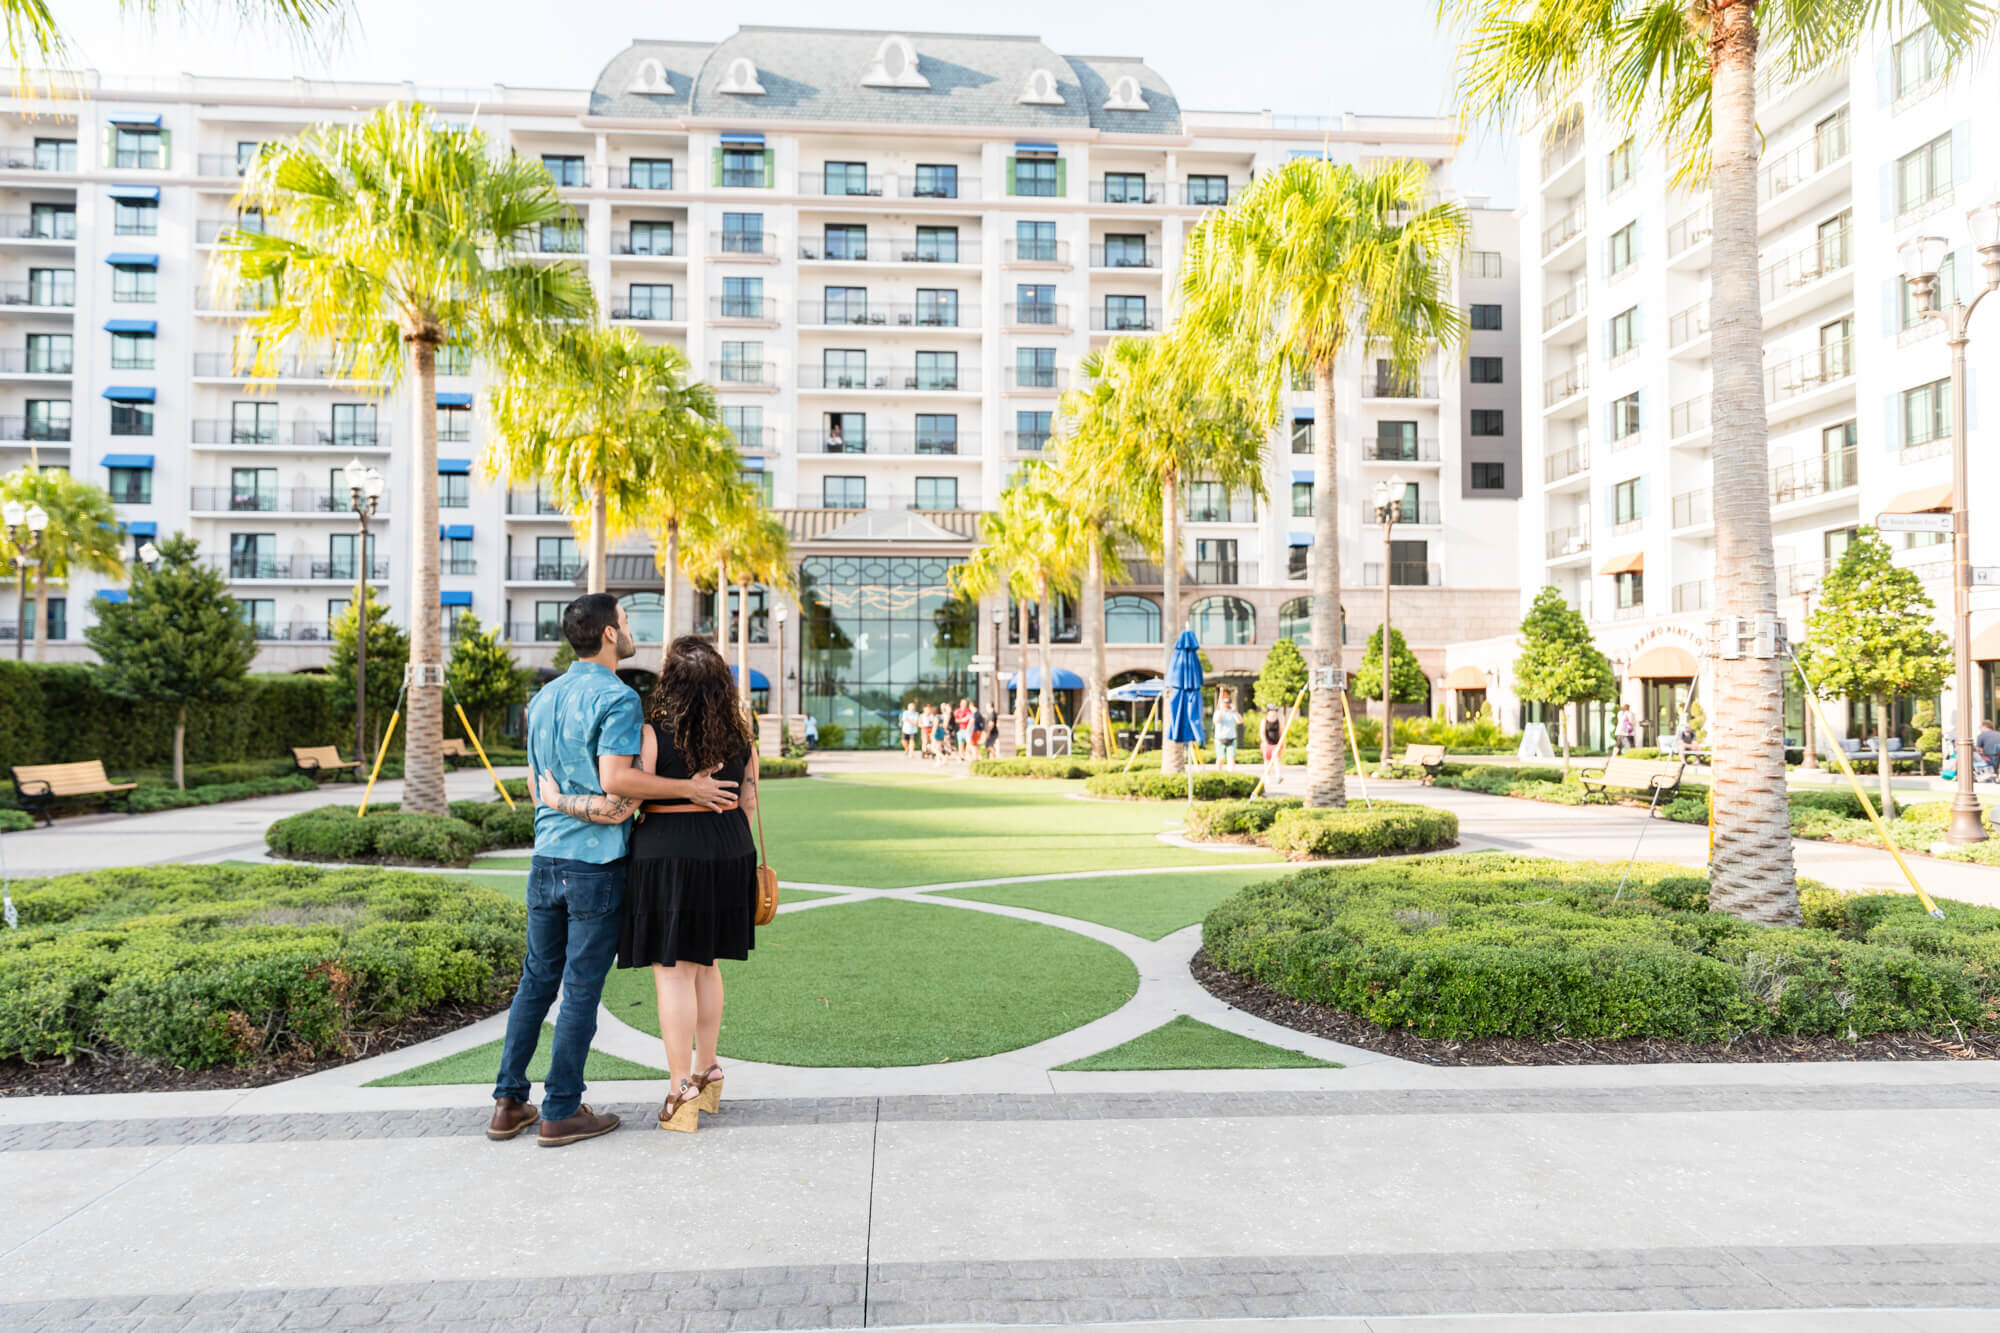  Surprise marriage proposal at Disney's Riviera Resort, Orlando, Florida 